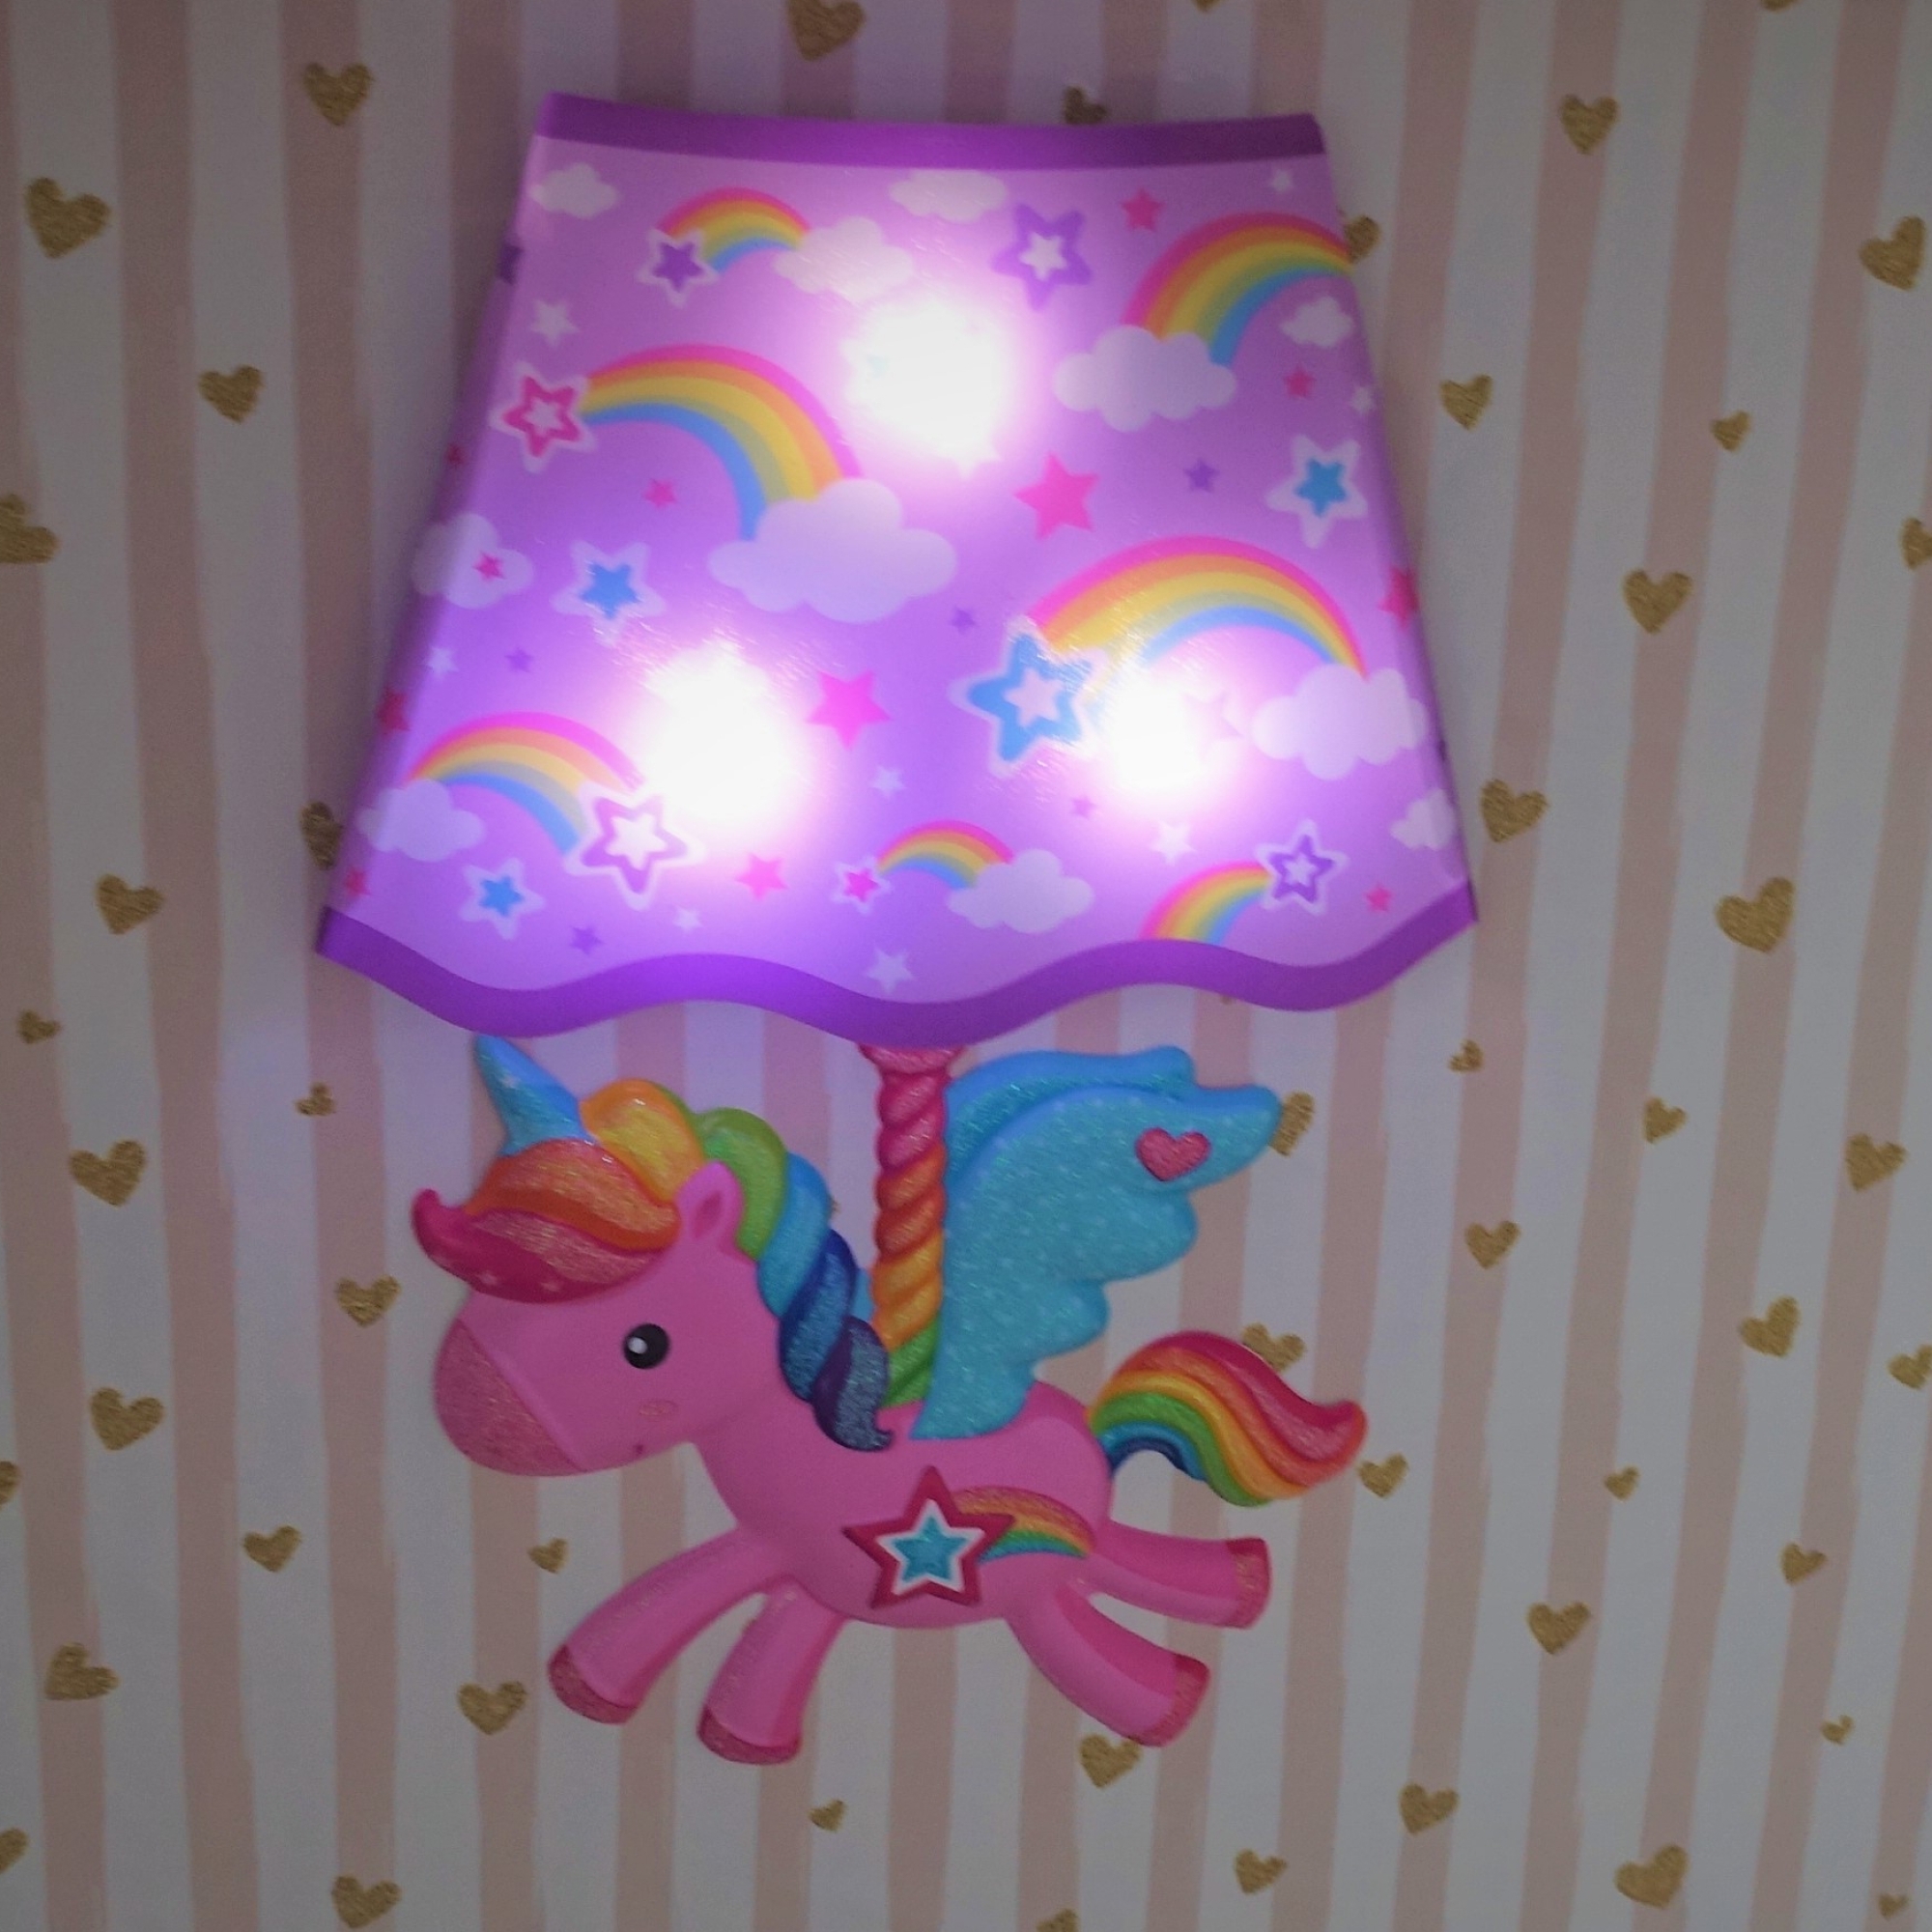 A purple unicorn lamp to decorate the cardboard playhouse